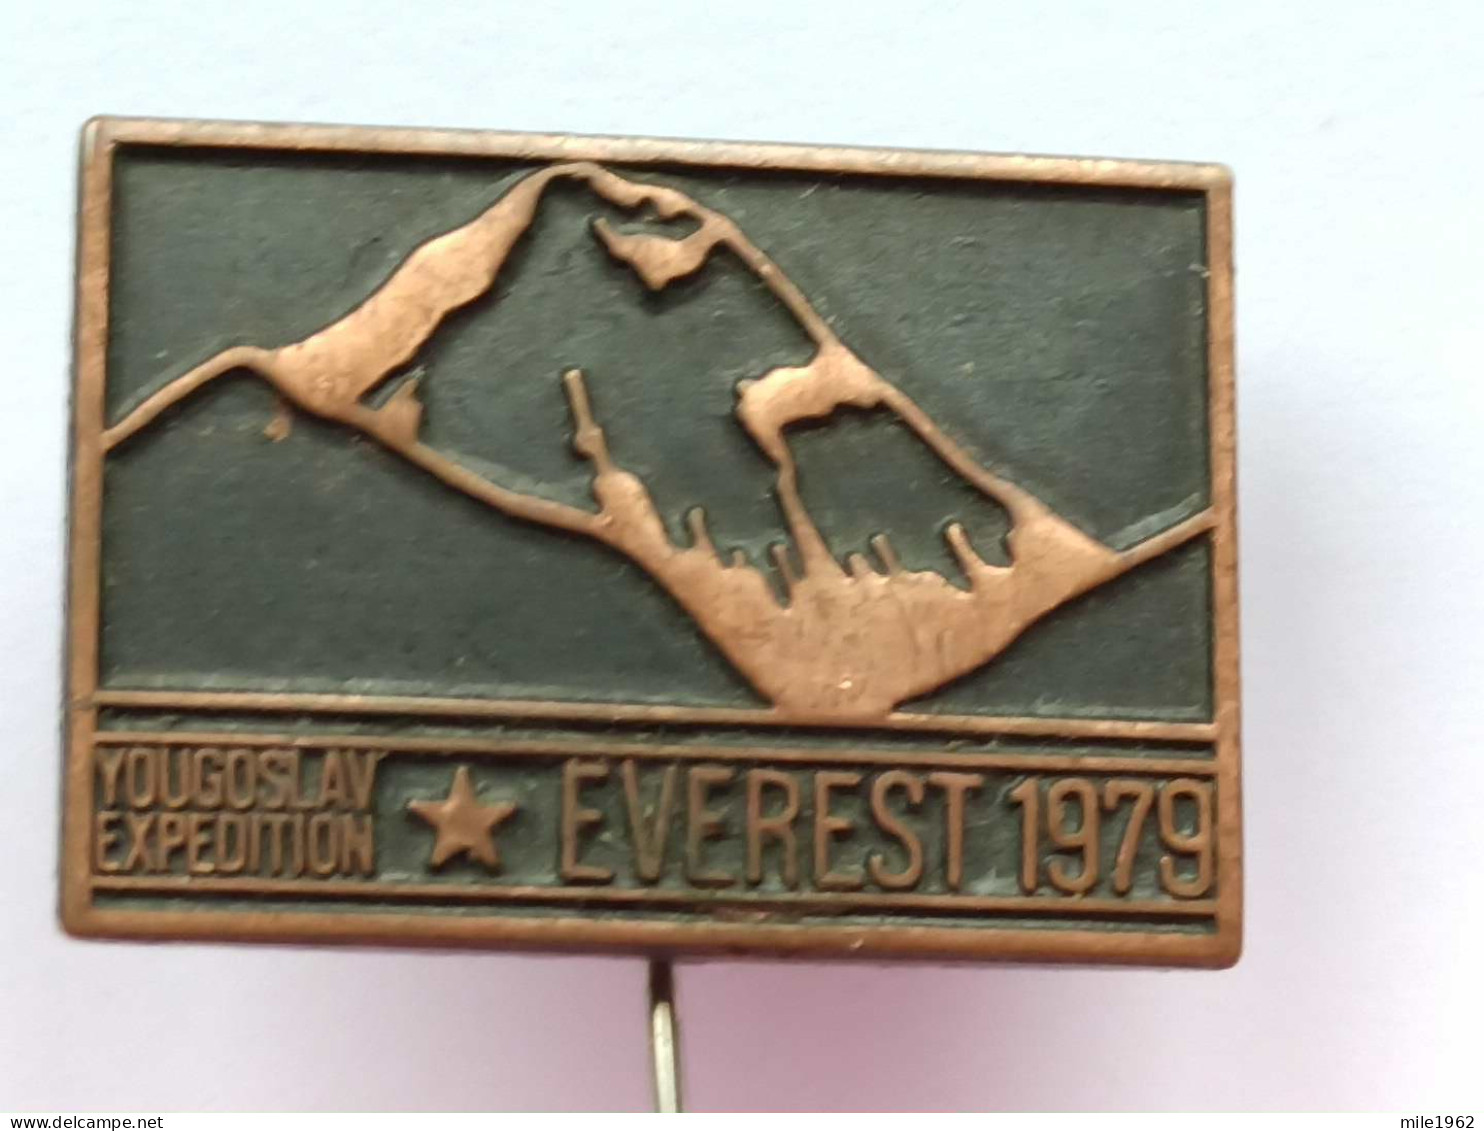 BADGE Z-74-2 - ALPINISM, Mountain, Mountaineering, EVEREST 1979, YUGOSLAV EXPEDITION - Alpinism, Mountaineering